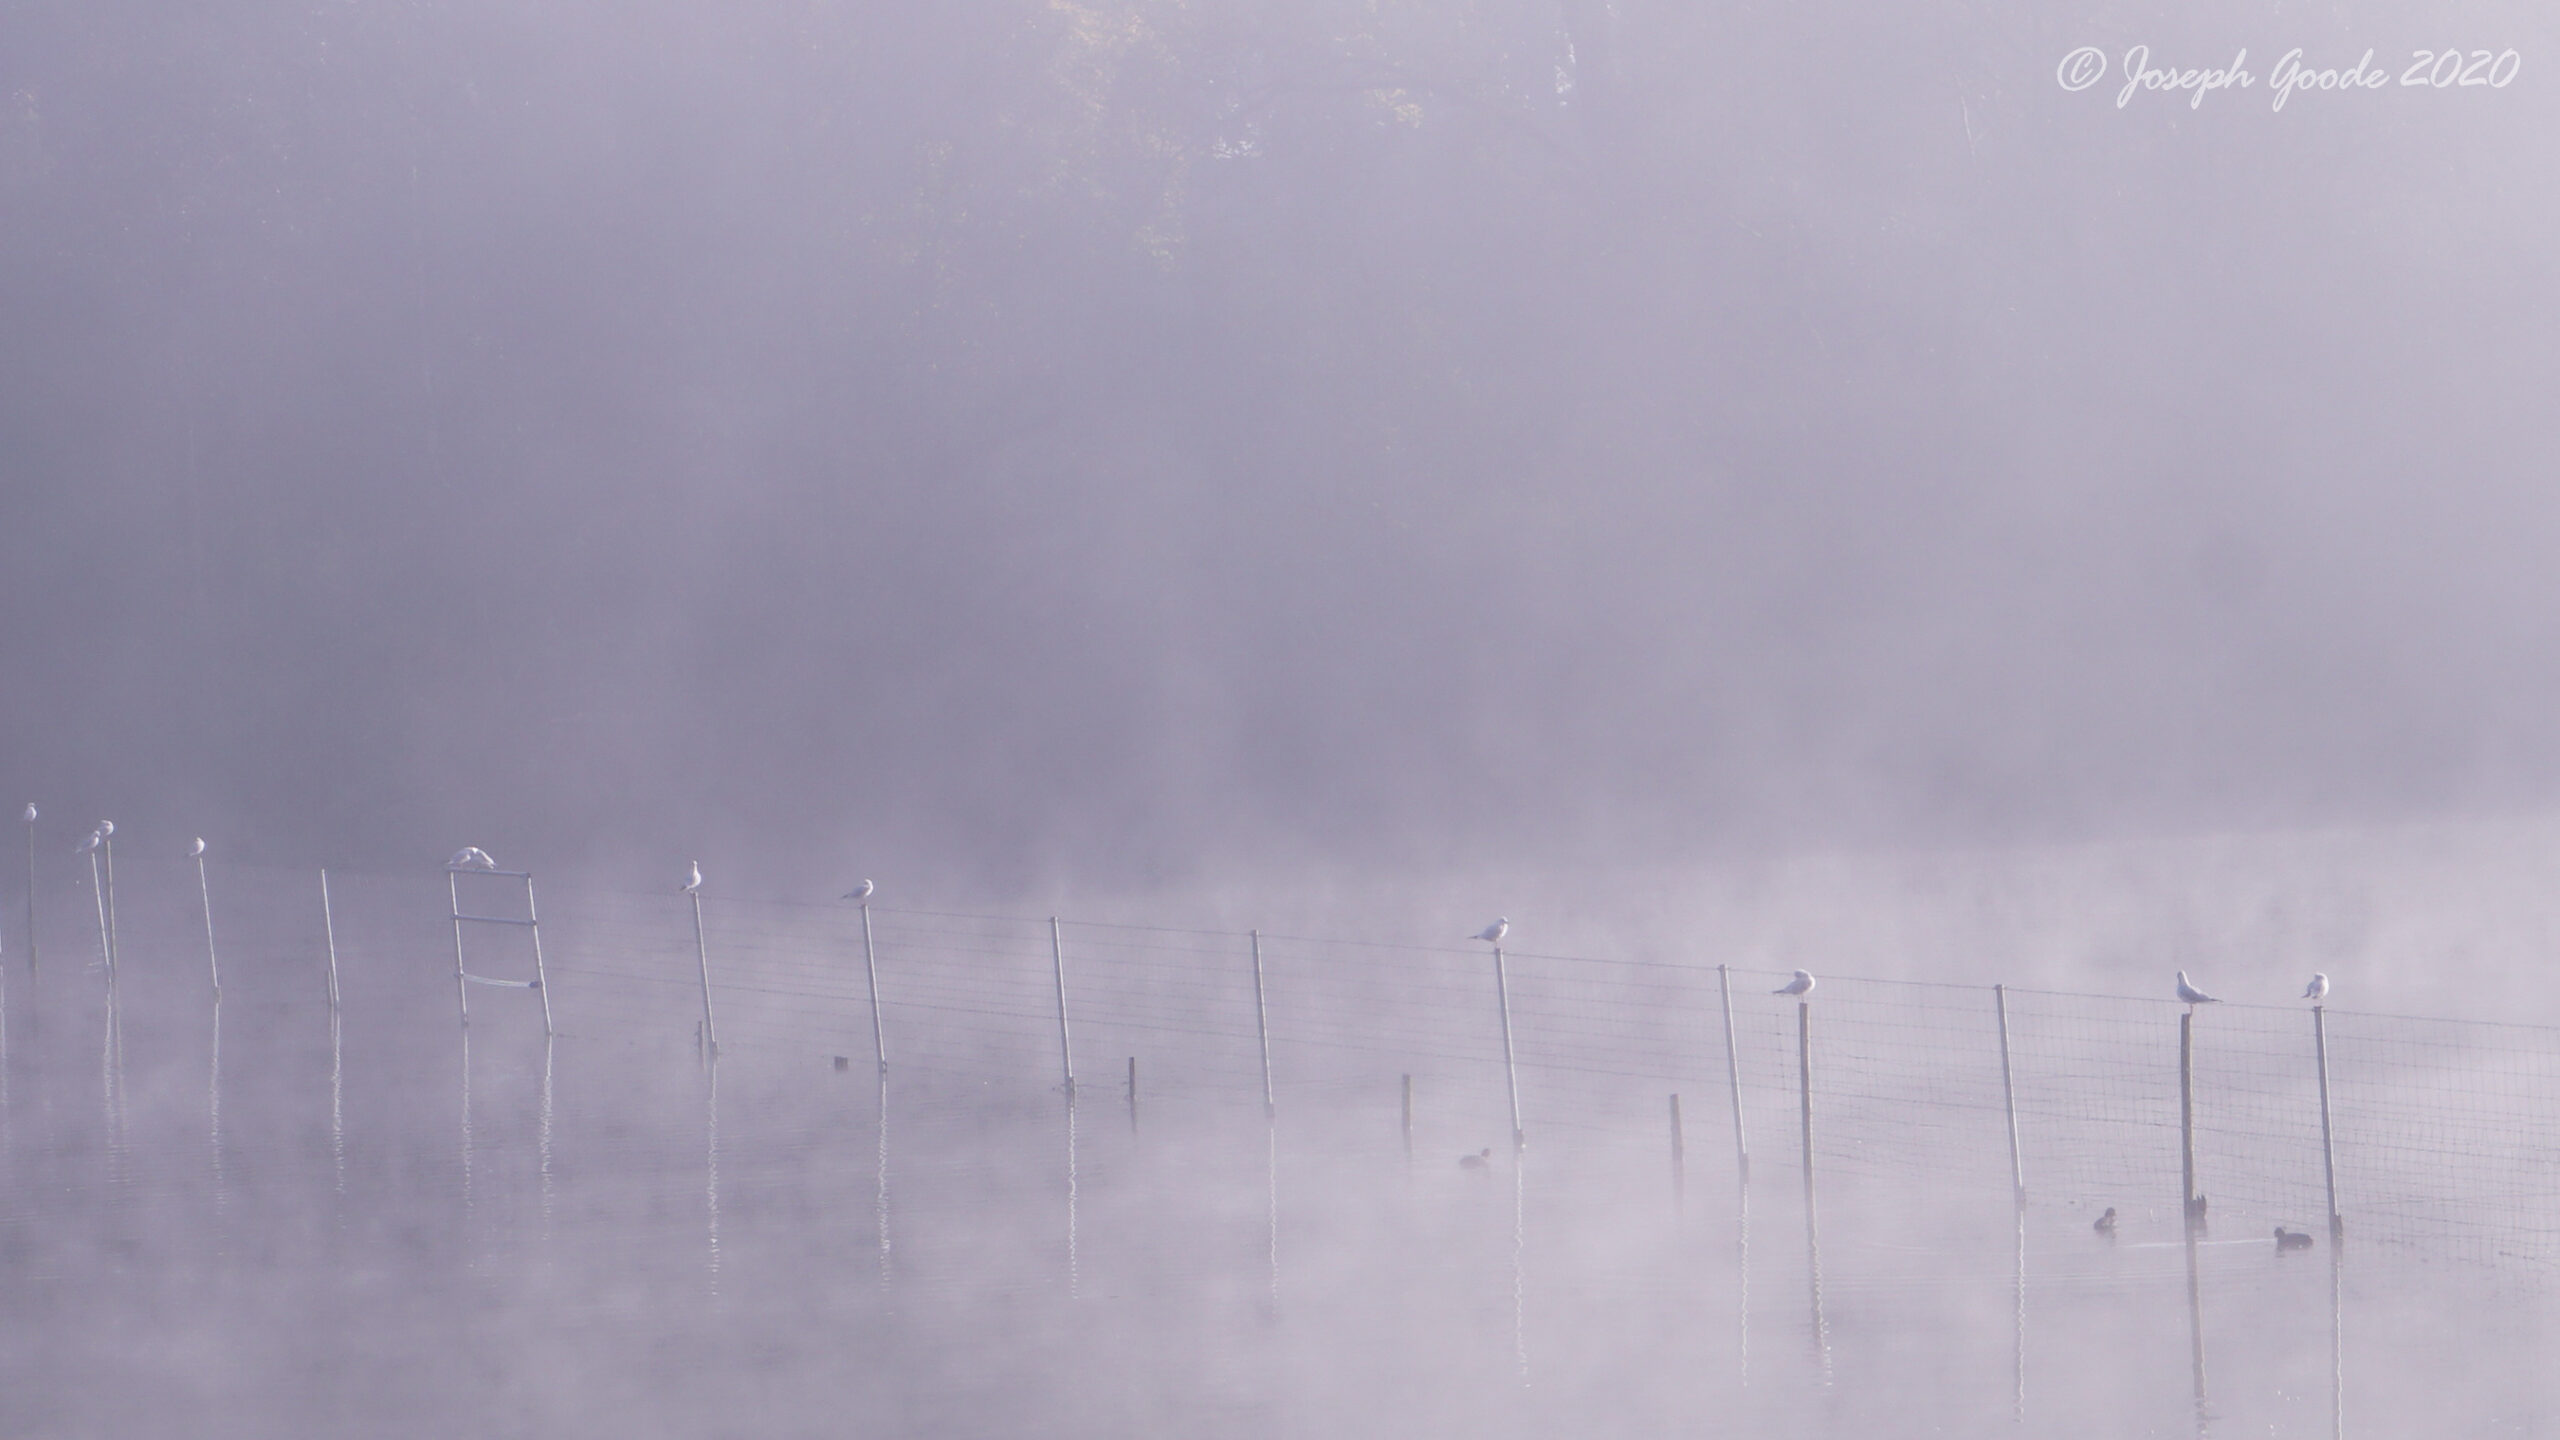 Gulls in the Mist